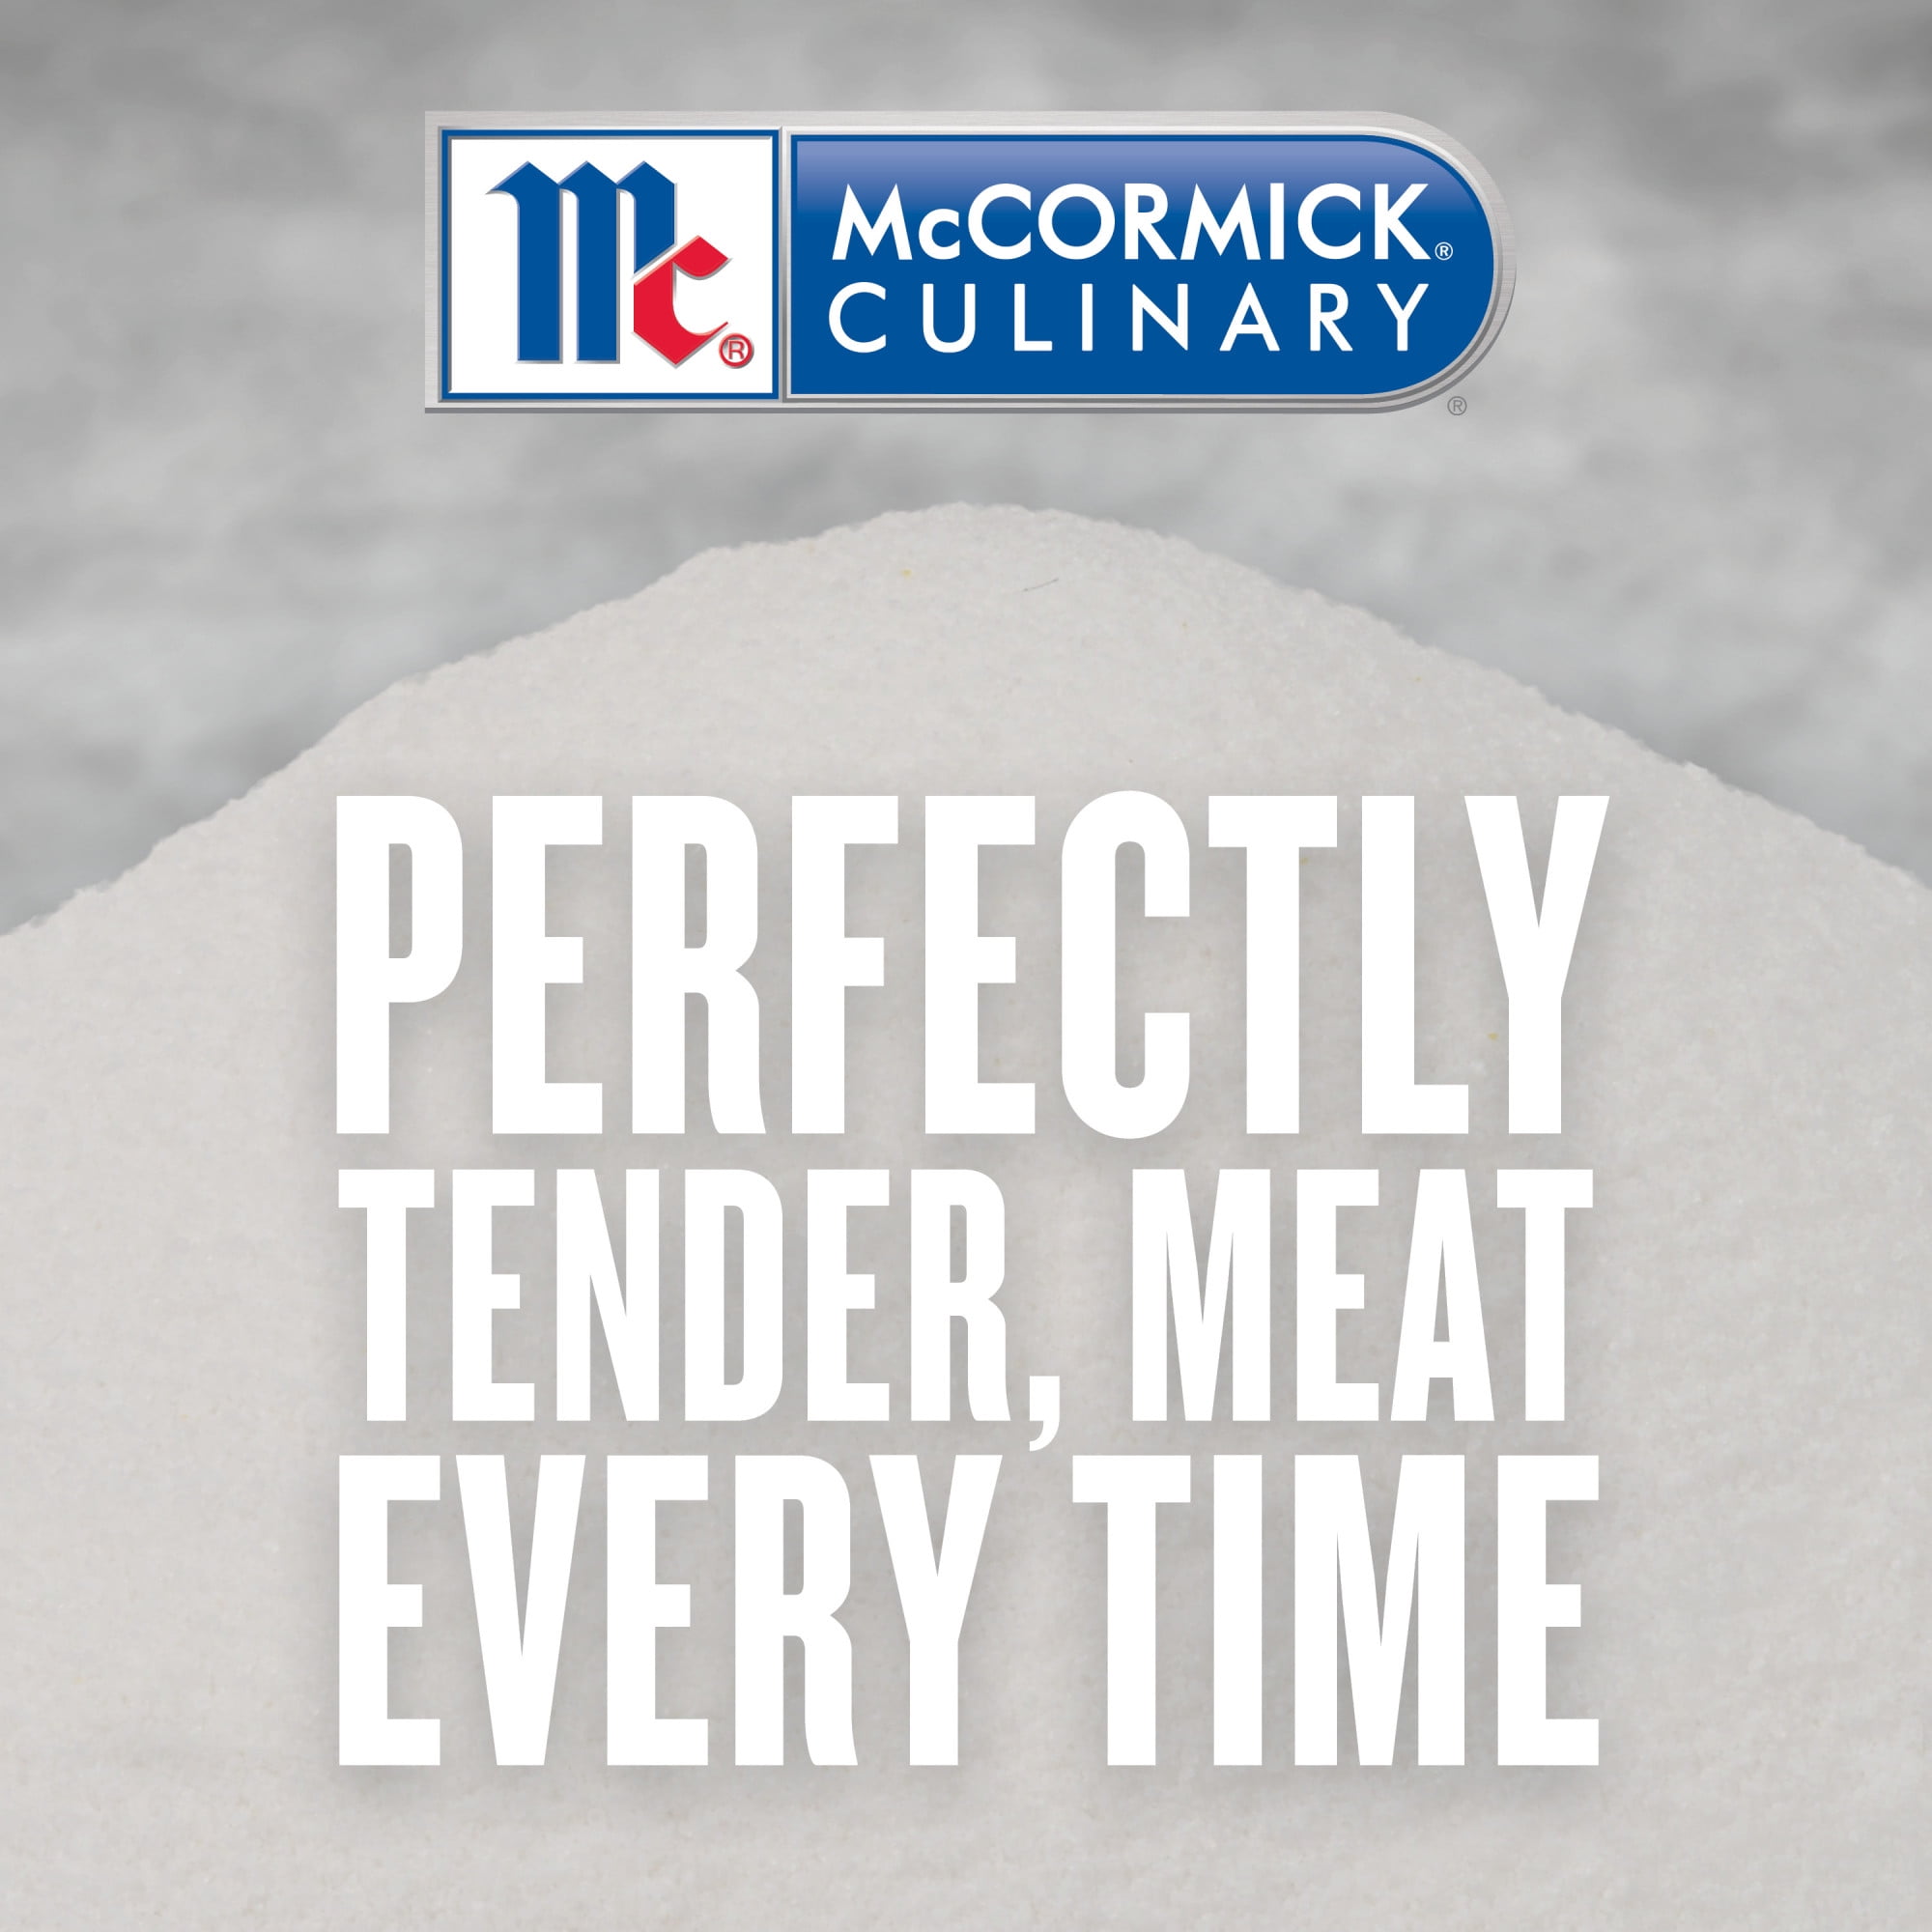 McCormick® Seasoned Meat Tenderizer, 5.5 oz - Foods Co.